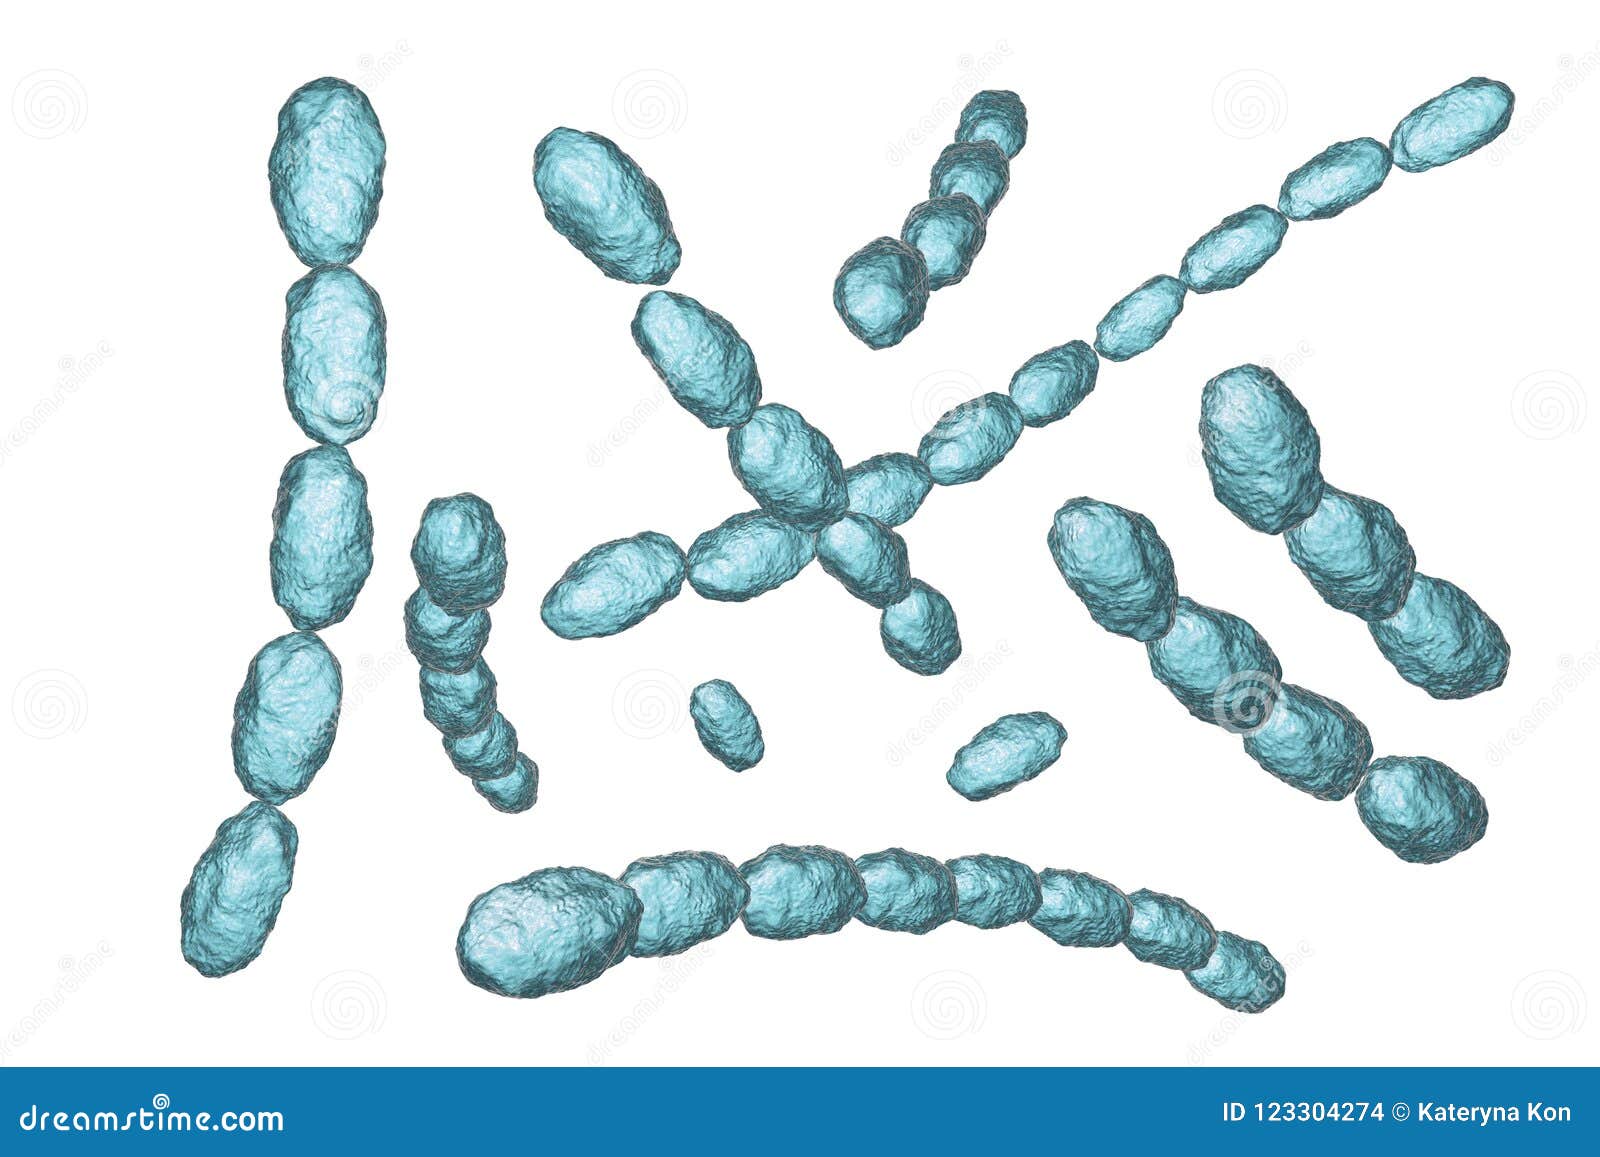 haemophilus ducreyi bacteria